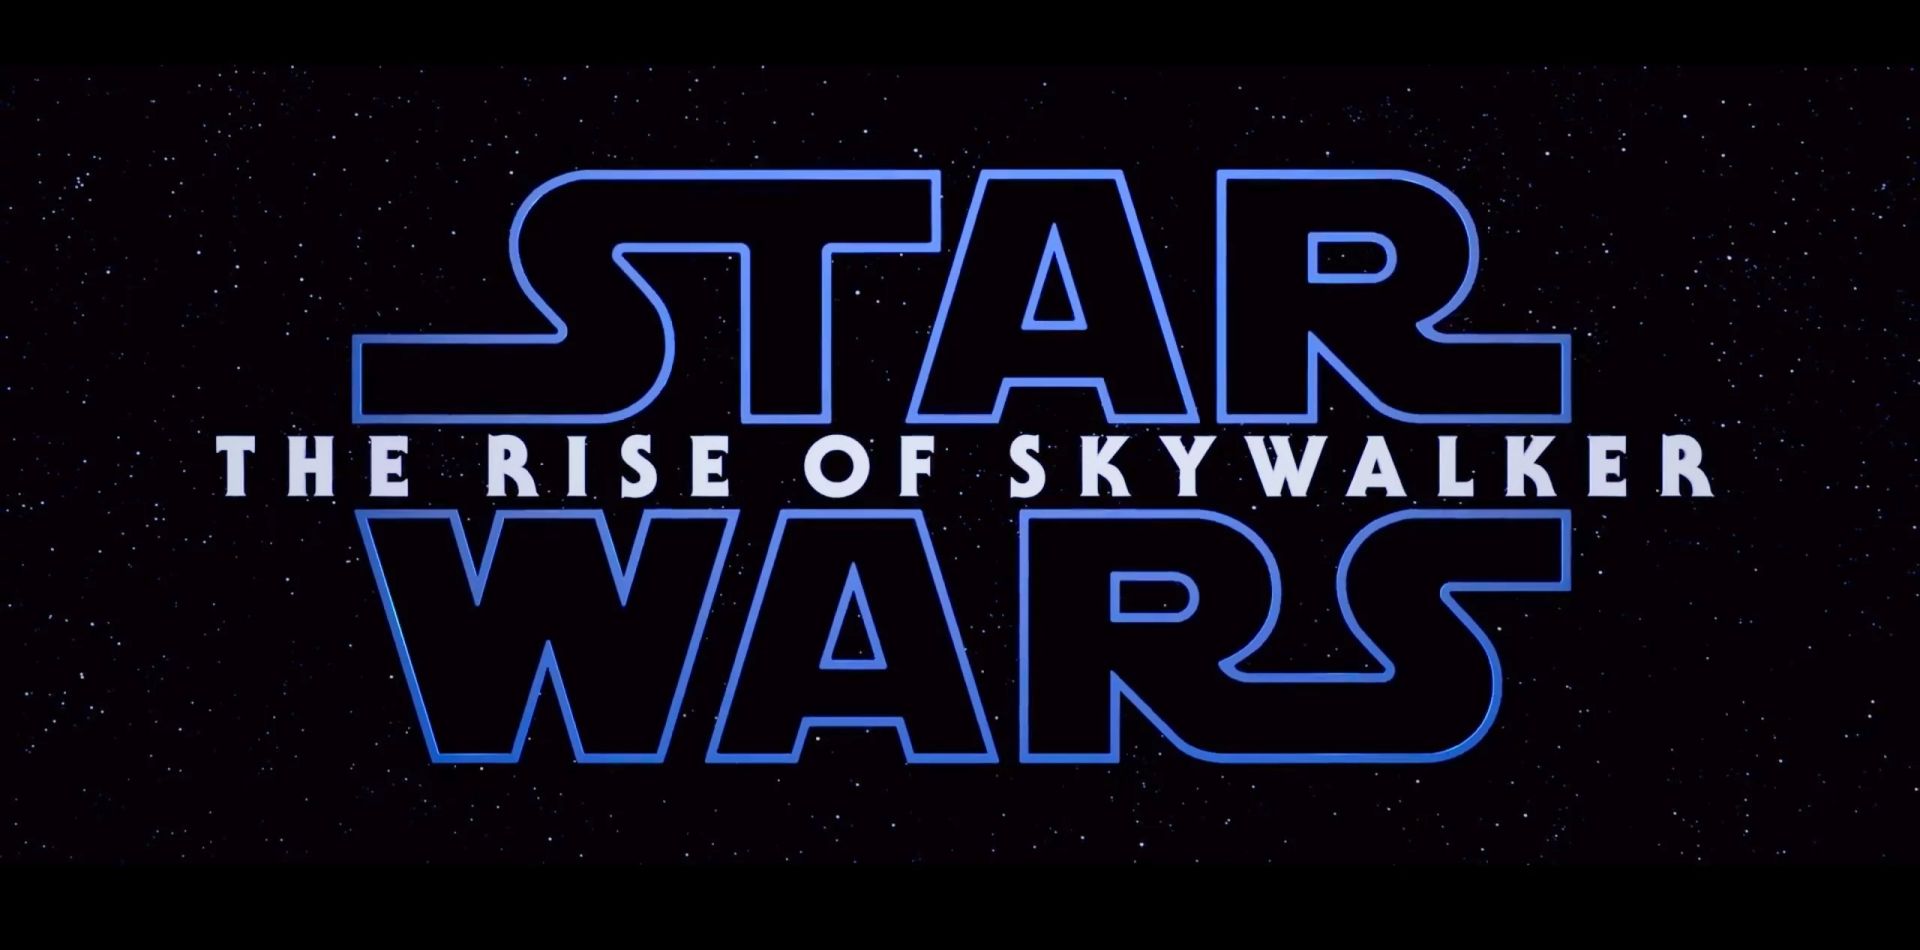 Star Wars Essay - Star Wars: Episode IX - The Rise of Skywalker